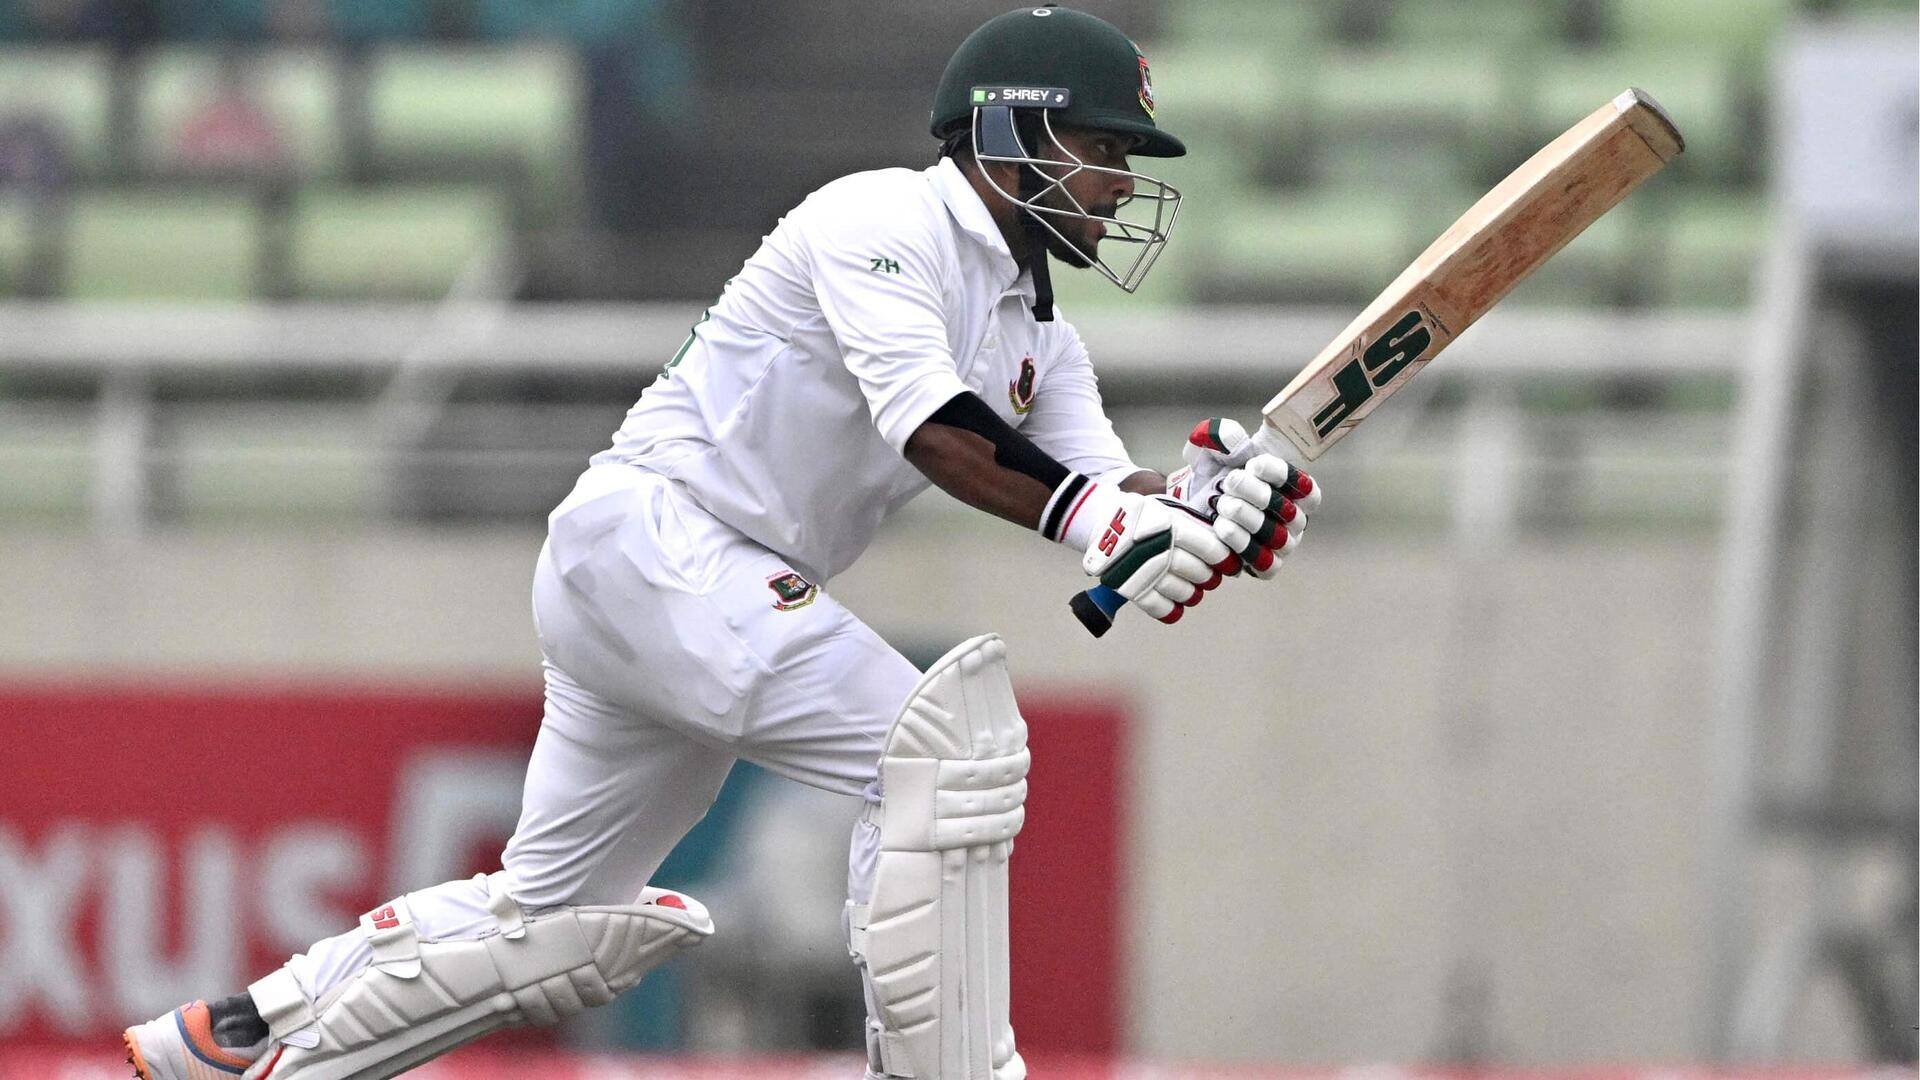 2nd Test: SL still on top despite Bangladesh's fightback